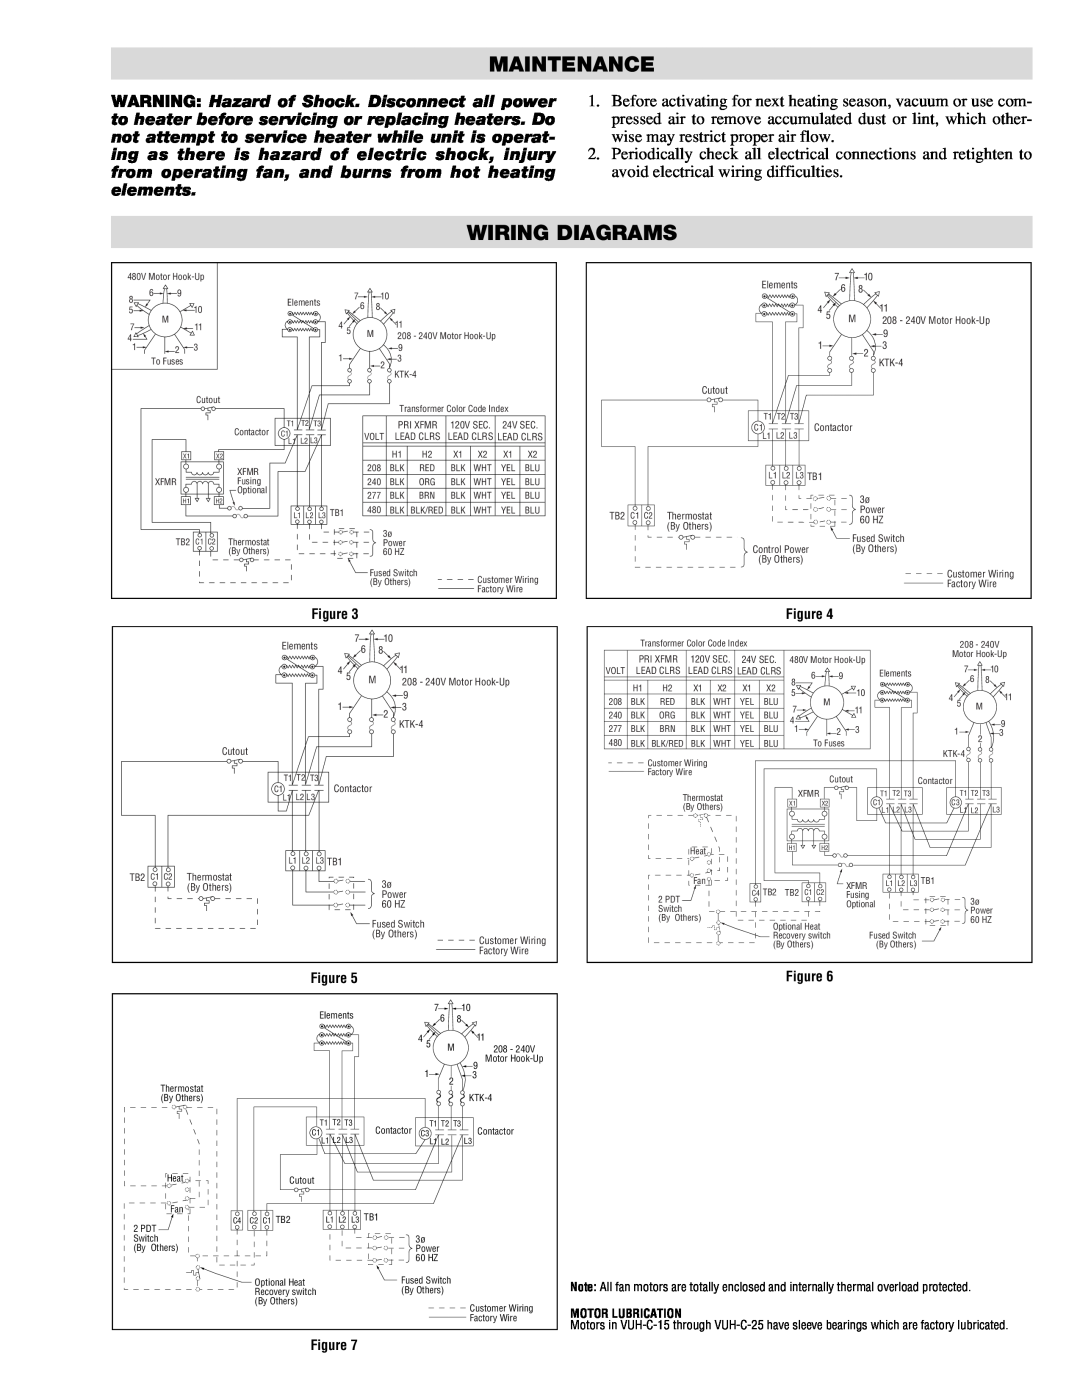 Chromalox PF451-3 specifications Maintenance, Wiring Diagrams, Motor Lubrication 